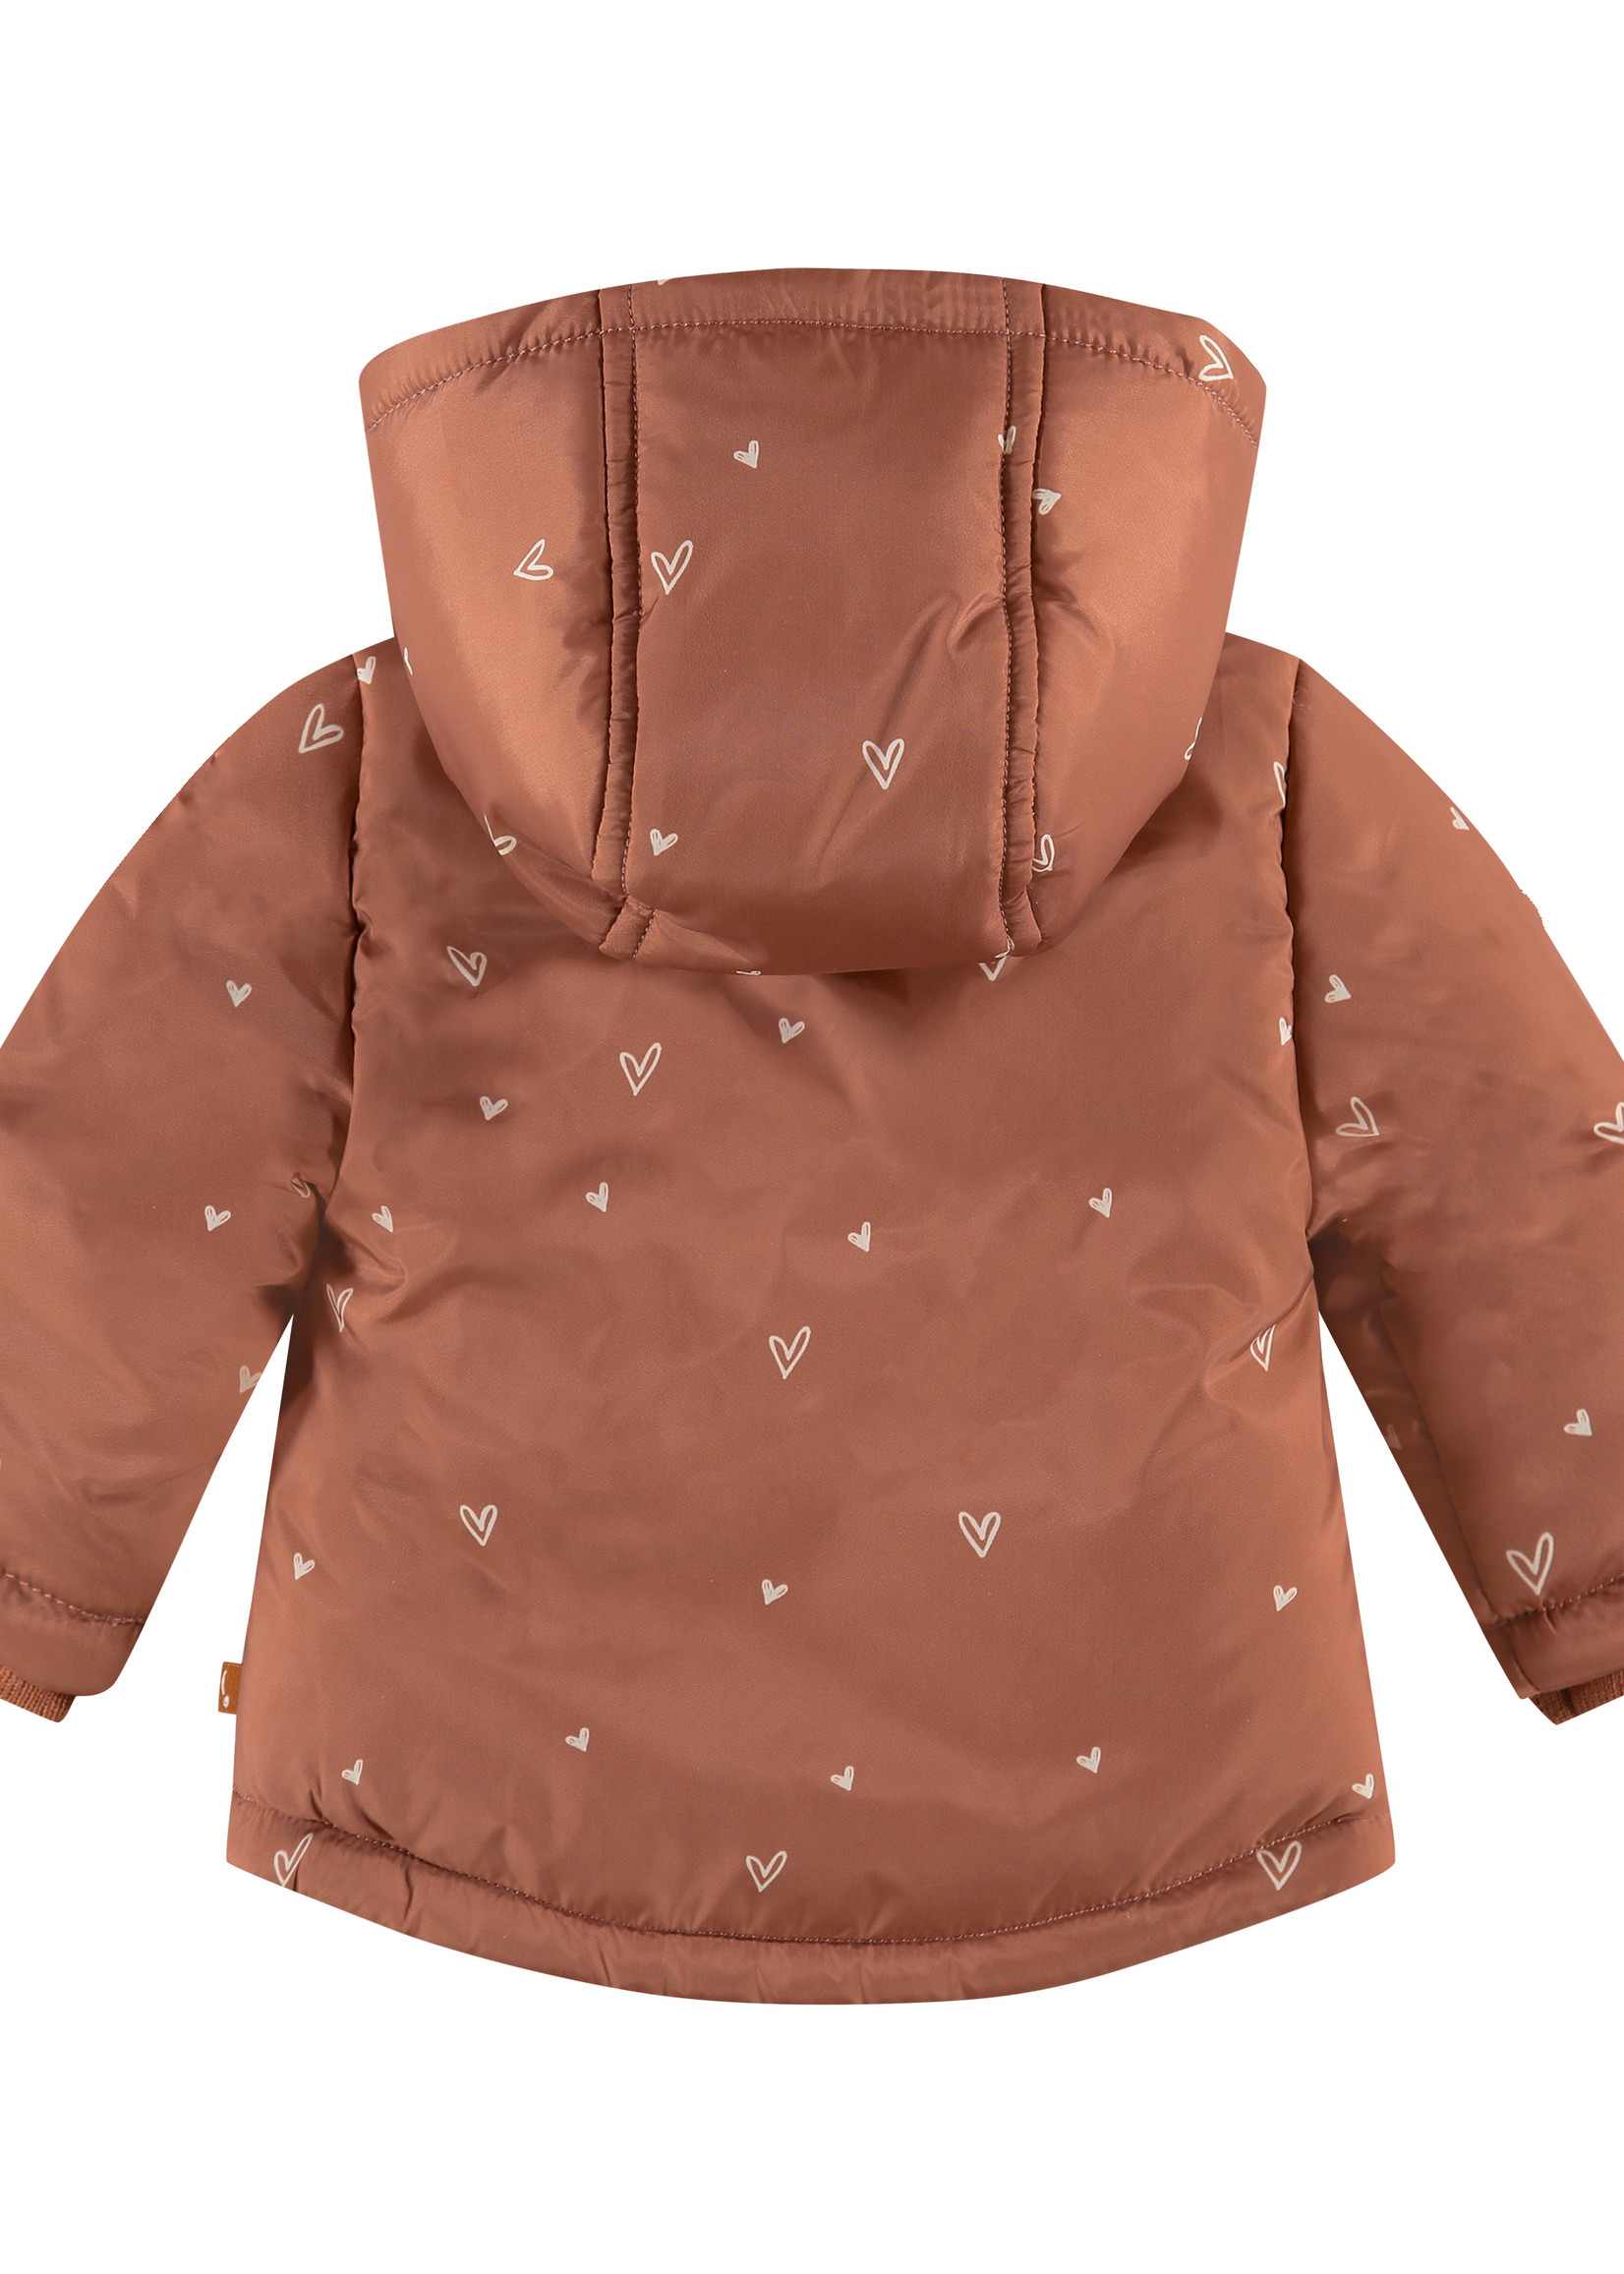 Babyface baby girls jacket, terra pink, NWB21628140